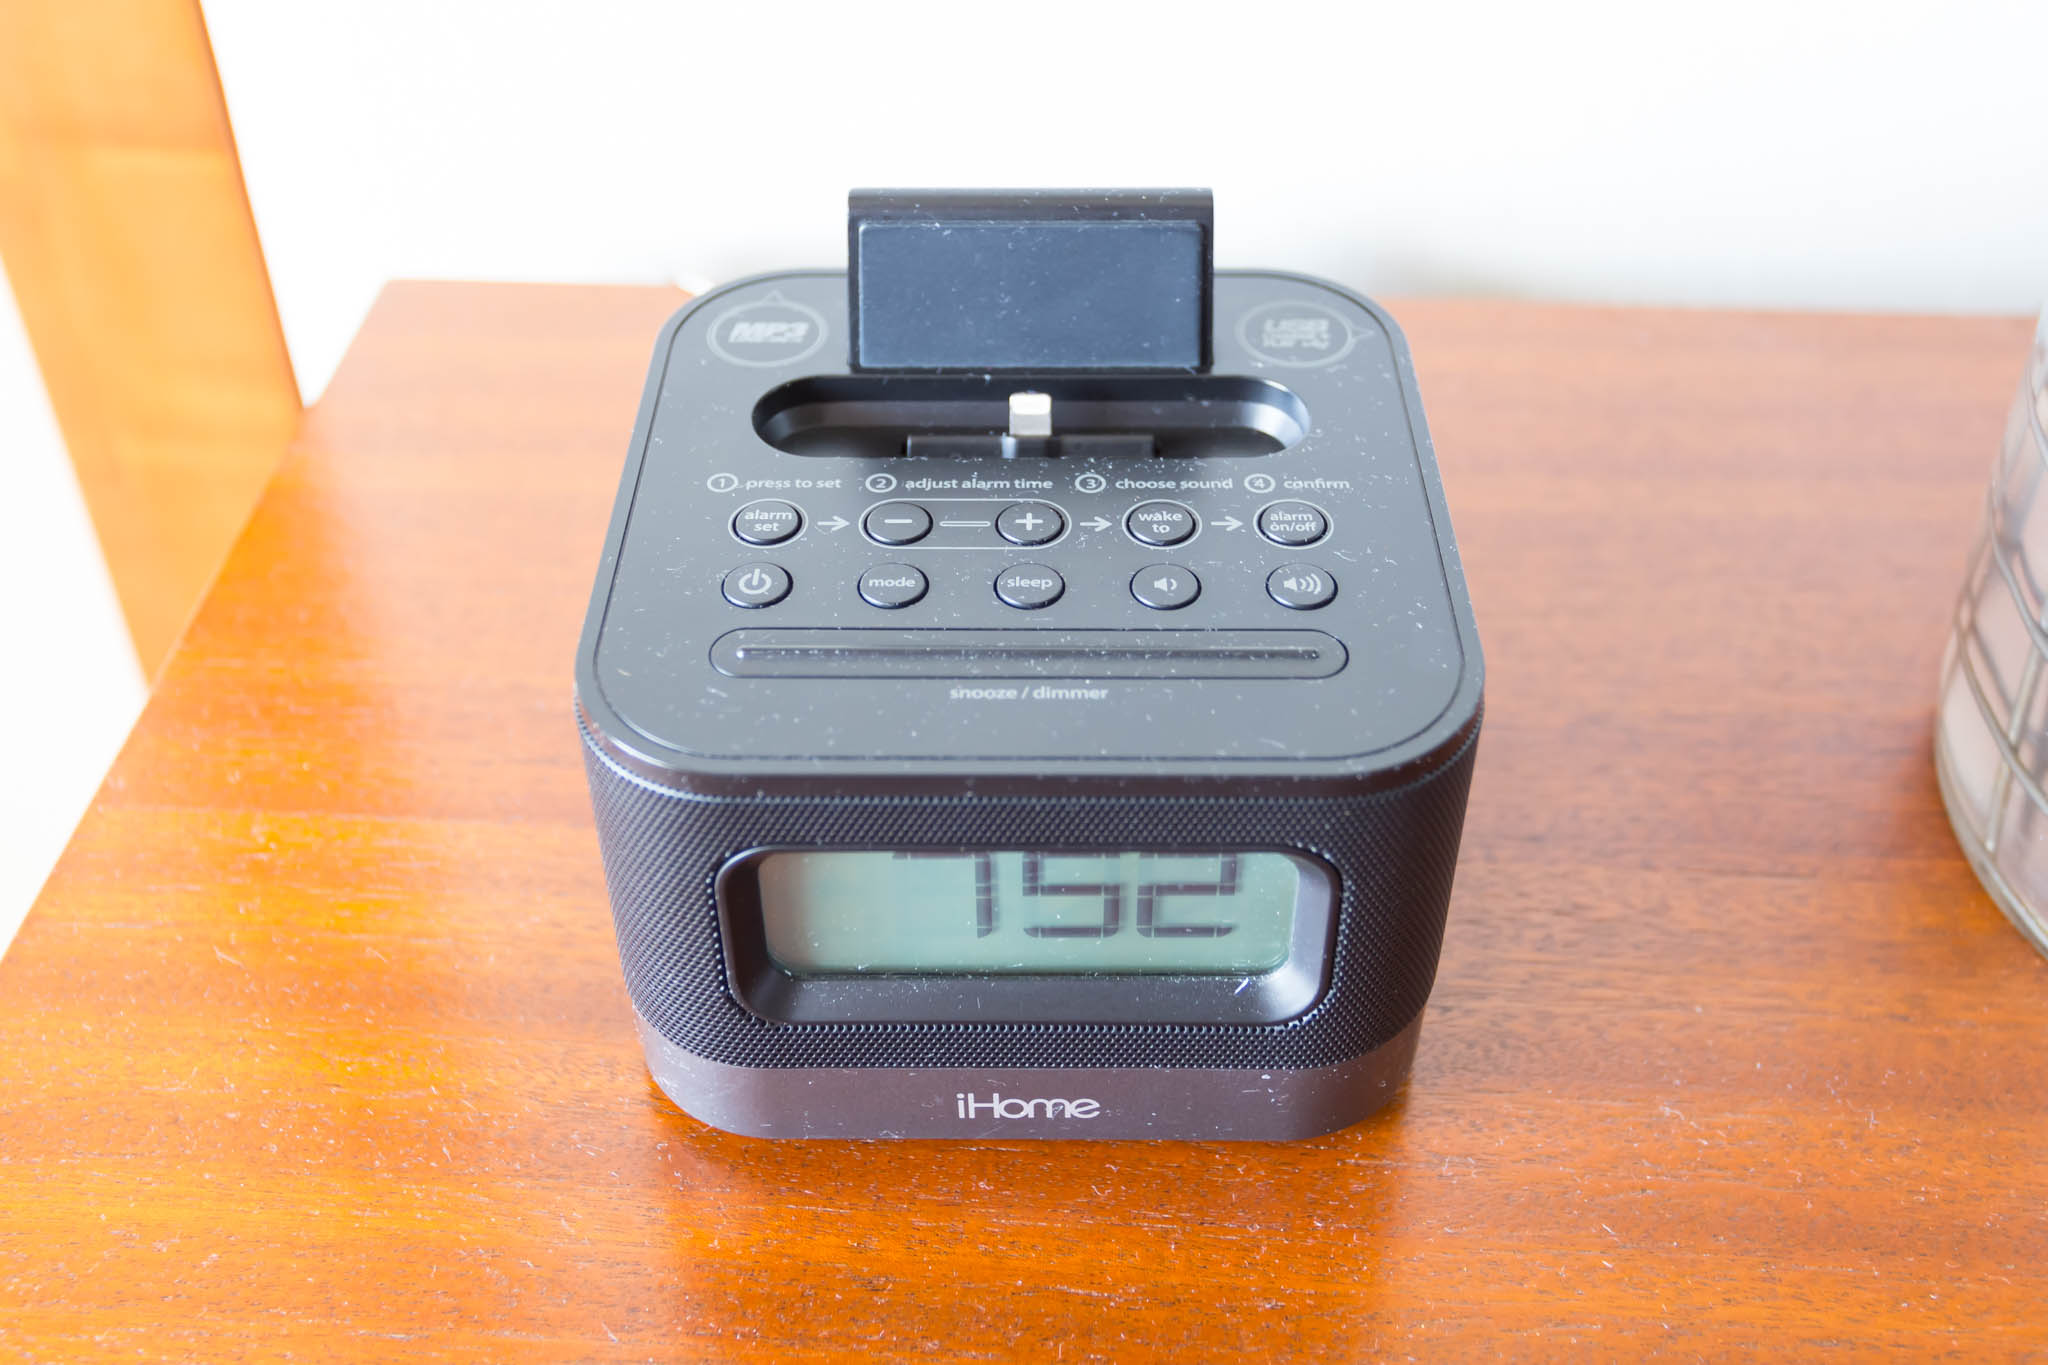 a black alarm clock on a wood surface